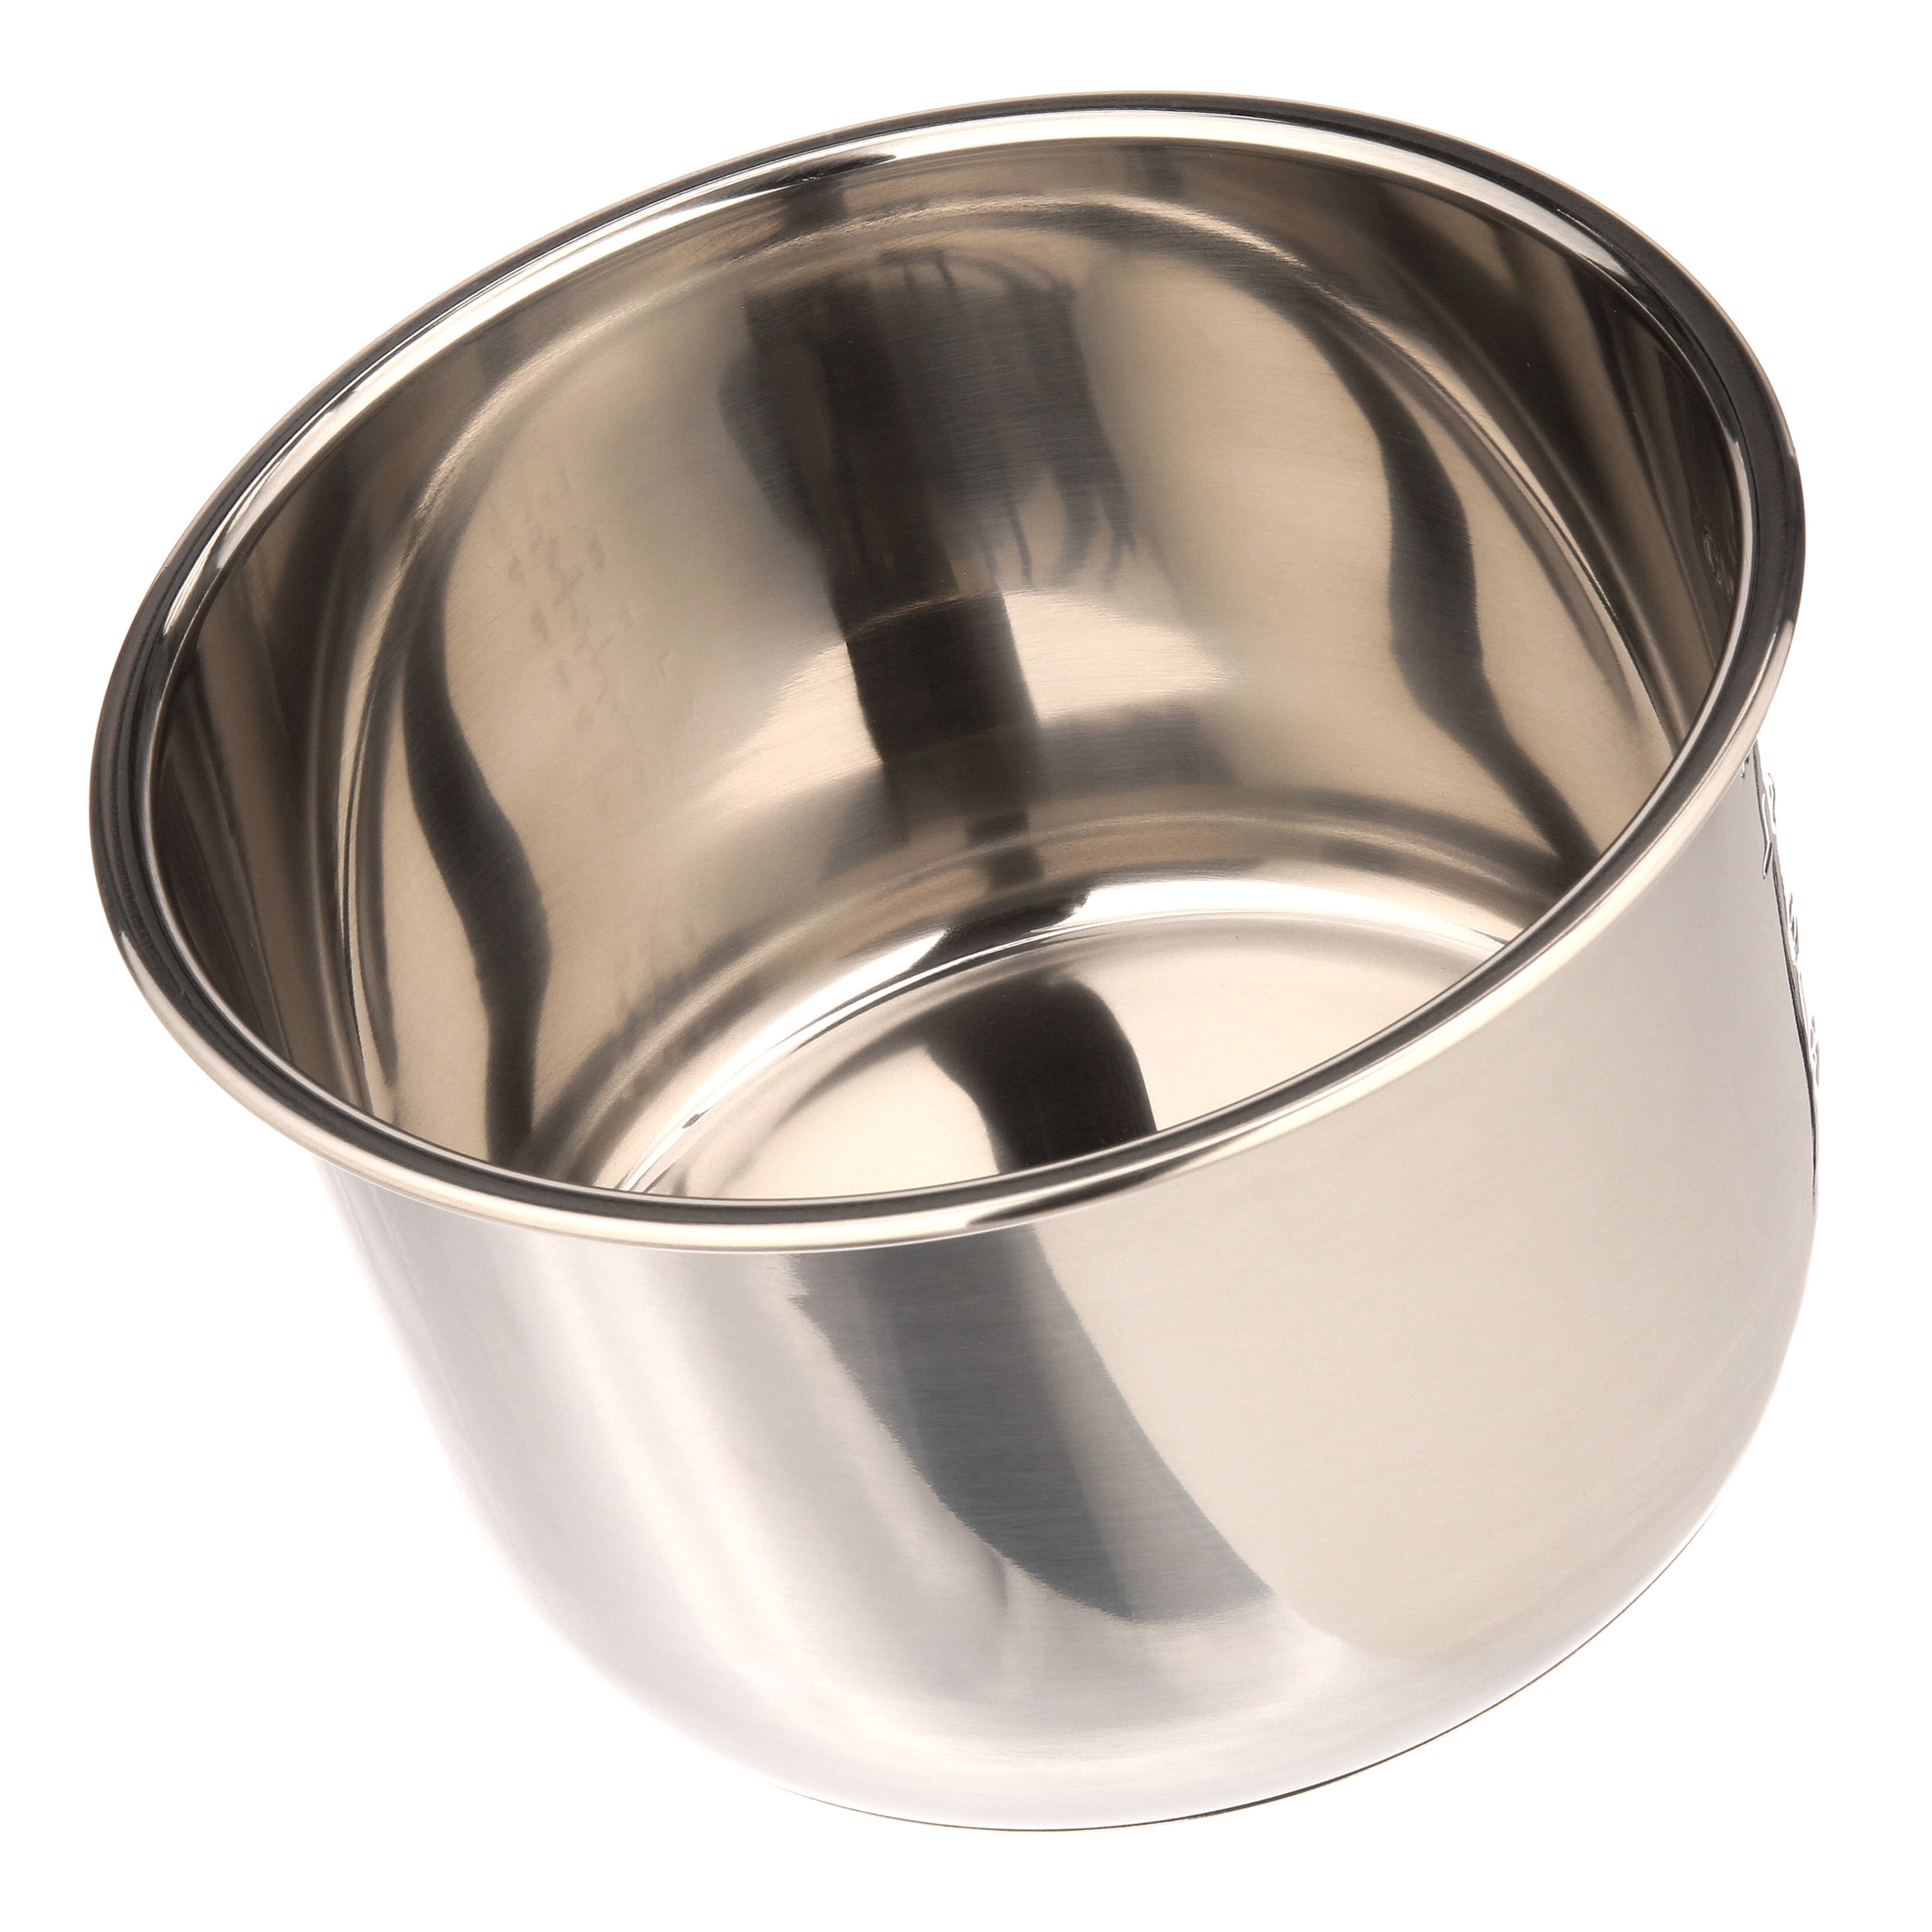 Instant Pot Inner Pot with 3-Ply Bottom, 6 Quart, Stainless Steel 